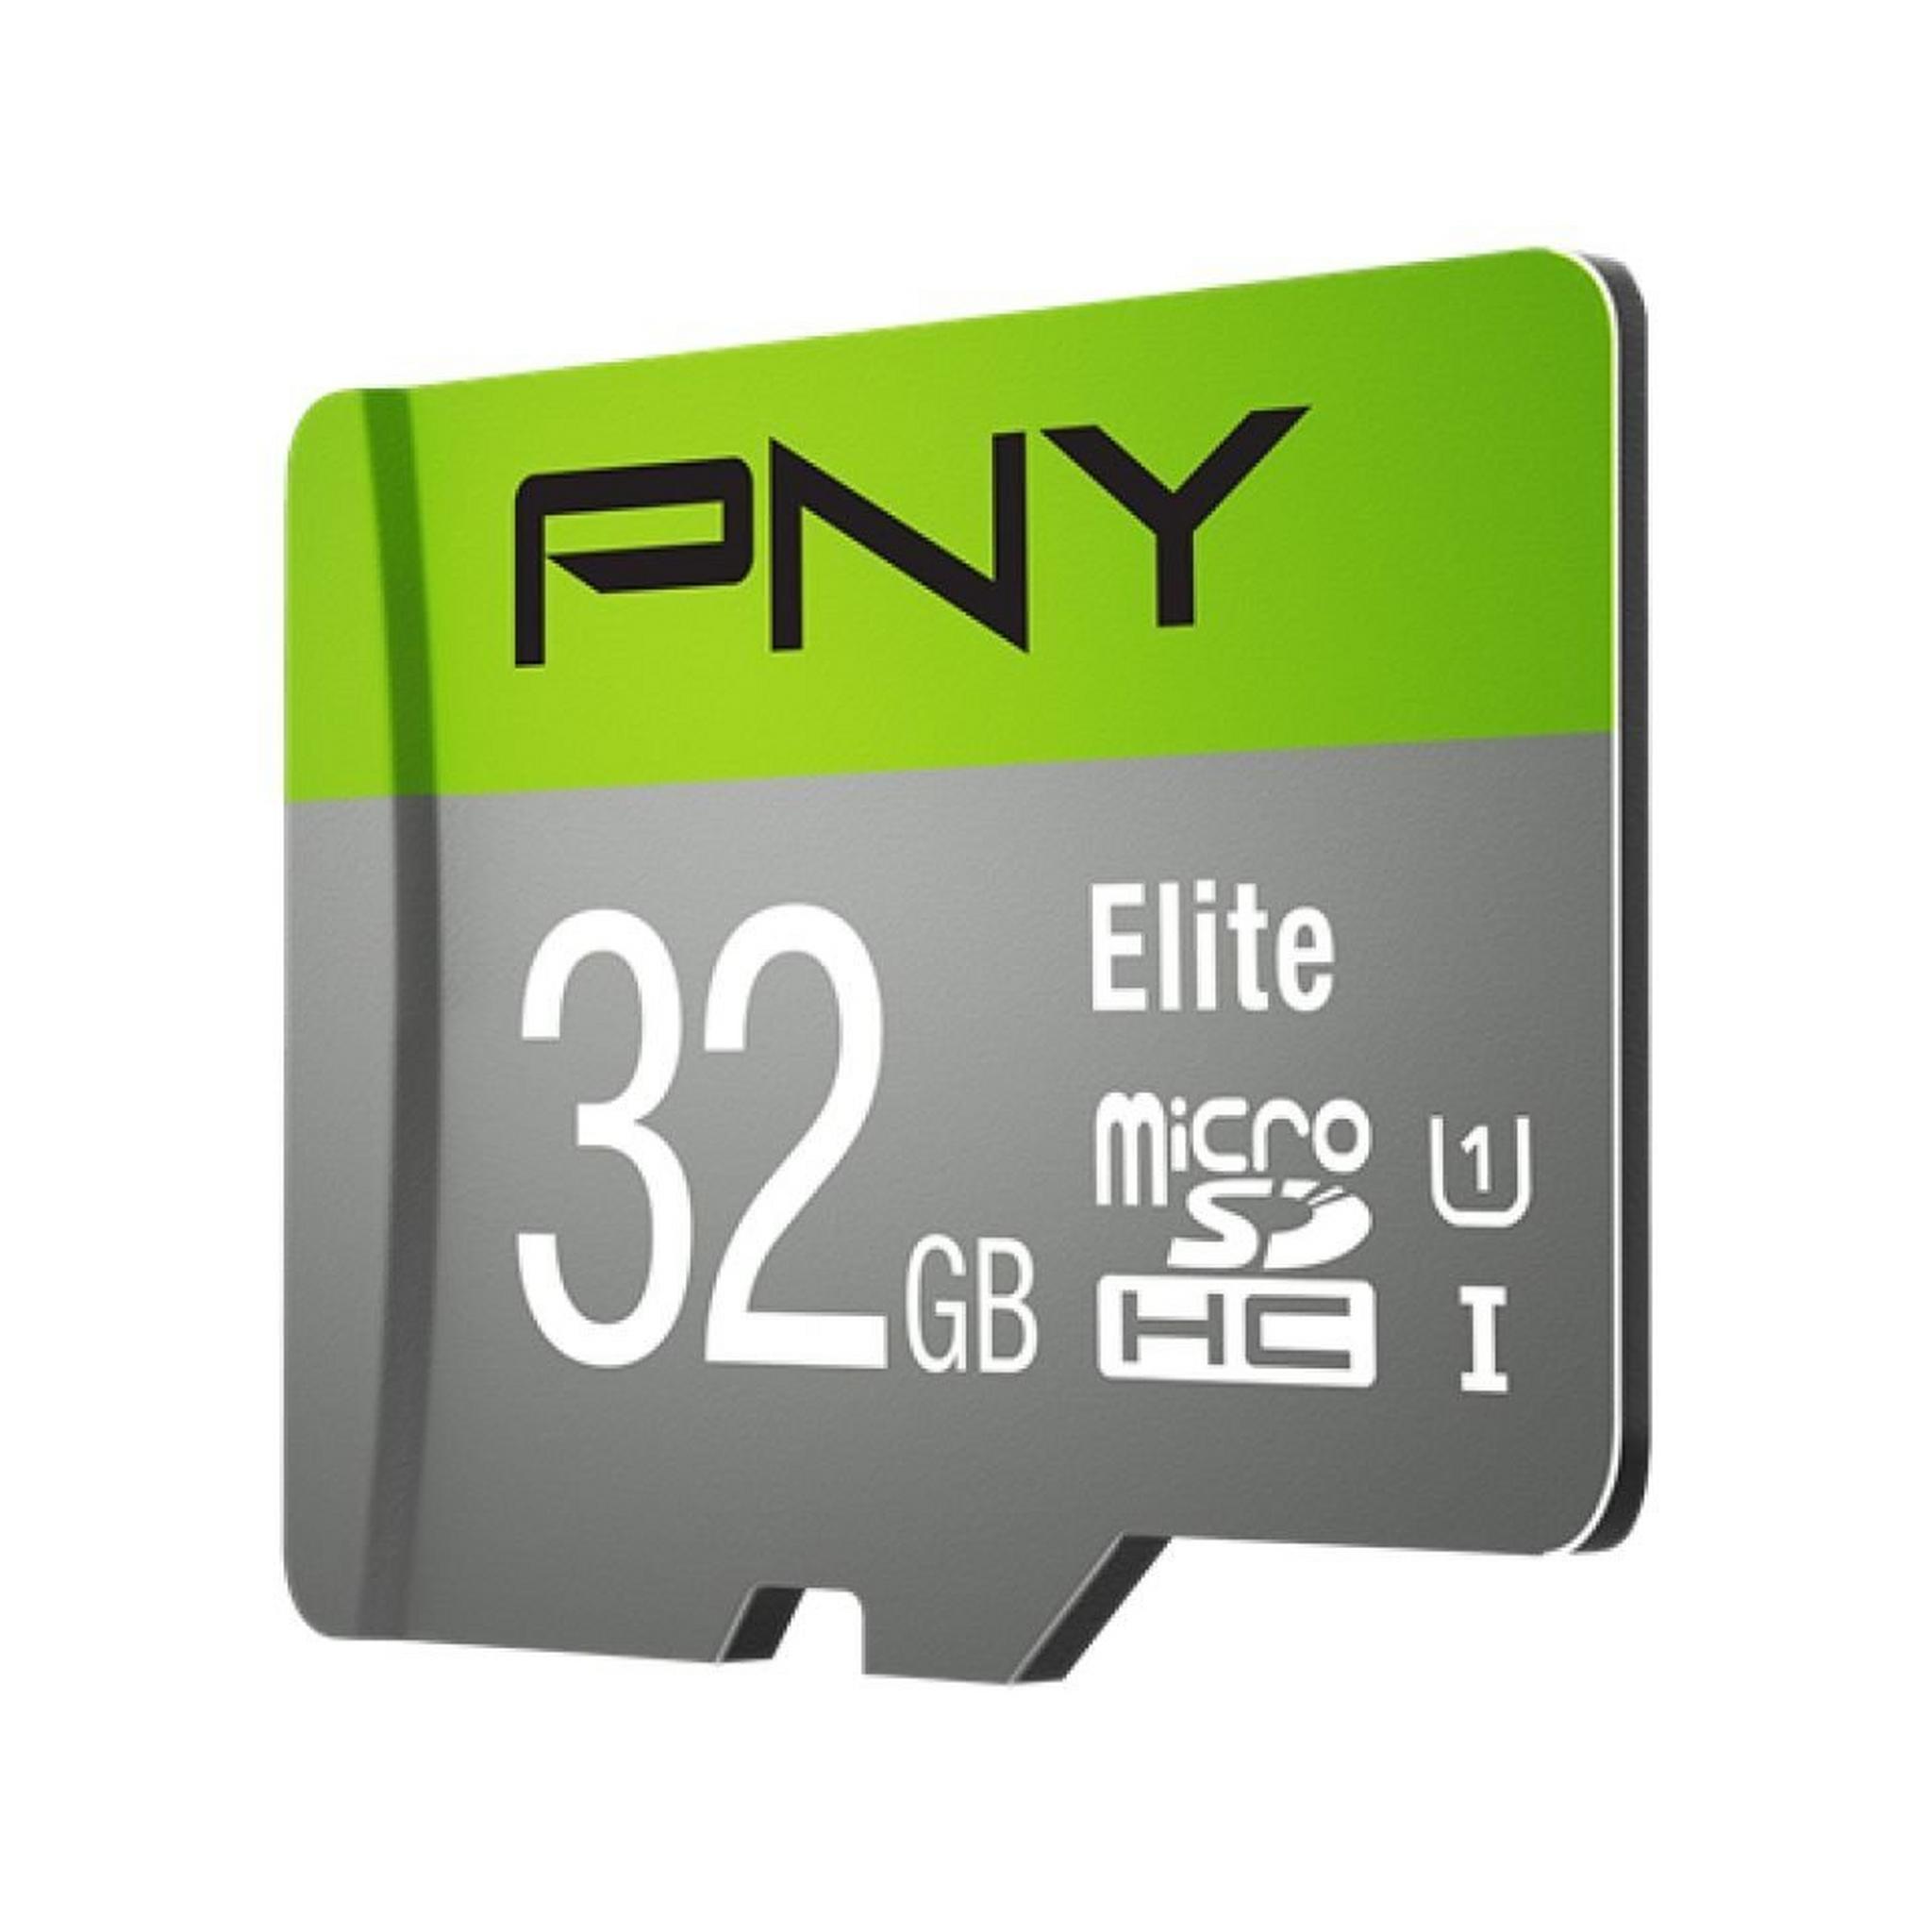 PNY Elite MicroSDHC Card 32 GB Class 10 Memory Card